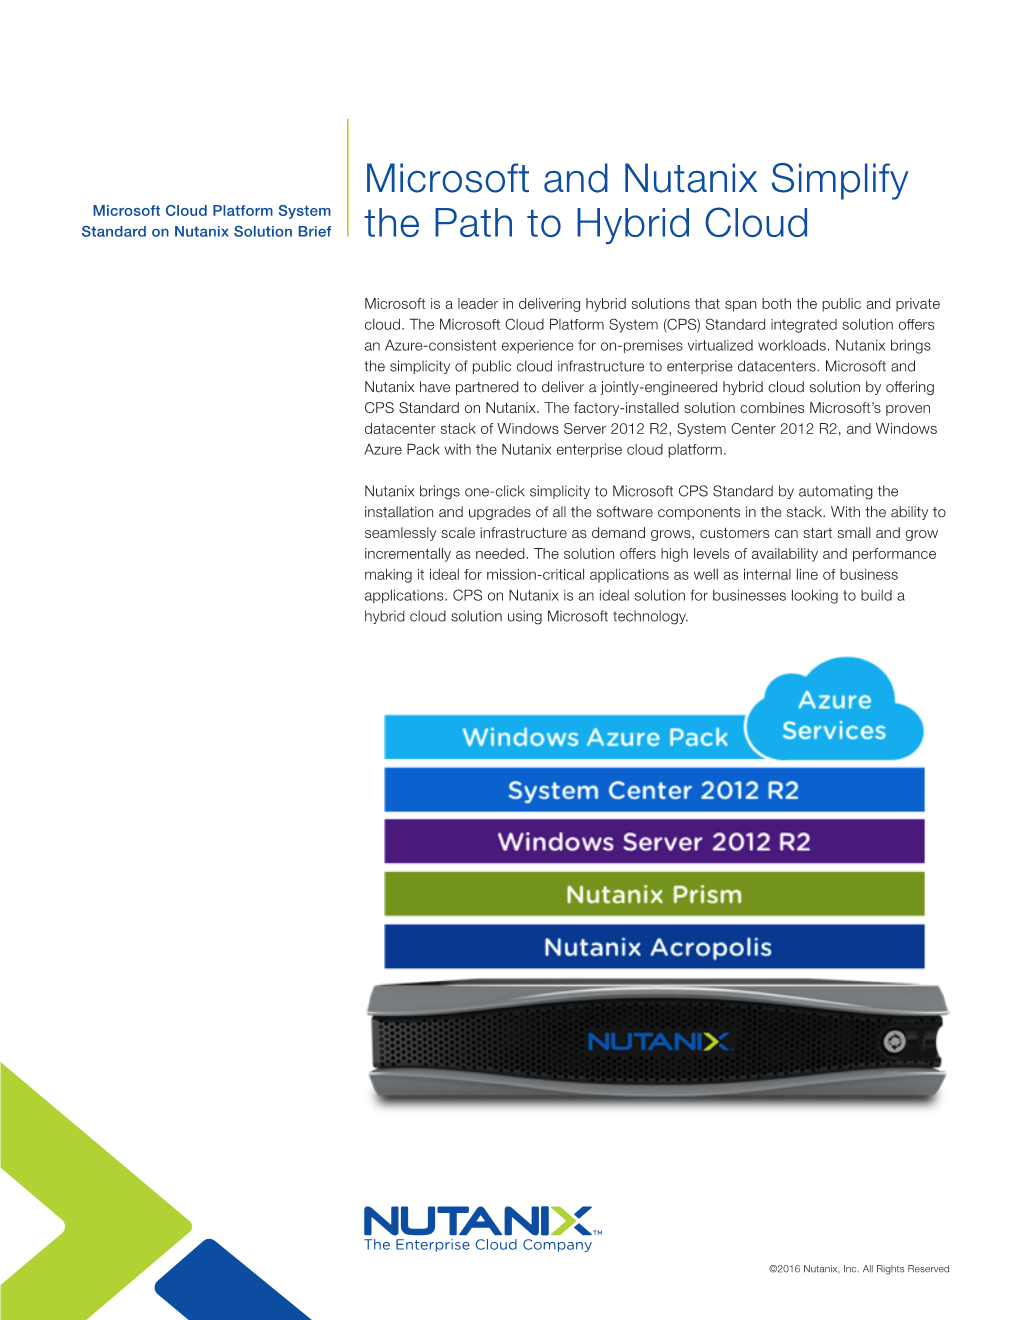 Microsoft and Nutanix Simplify the Path to Hybrid Cloud